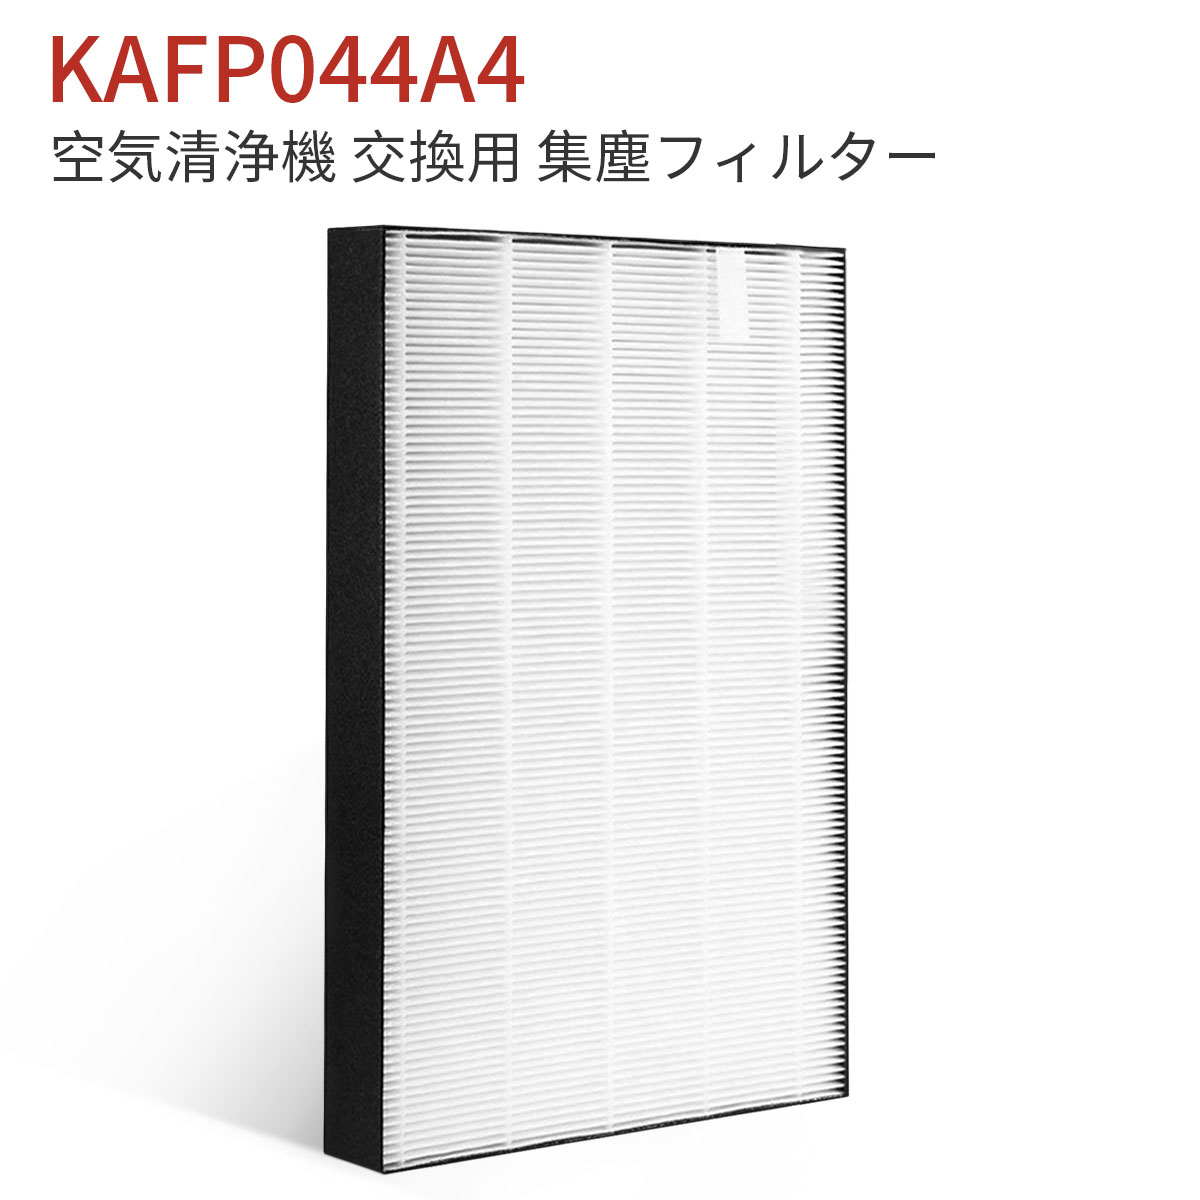 KAFP044A4 集塵フィルター ダイキン 加湿空気清浄機 フィルター kafp044a4 交換用 静電HEPAフィルター (互換品/1枚入り)